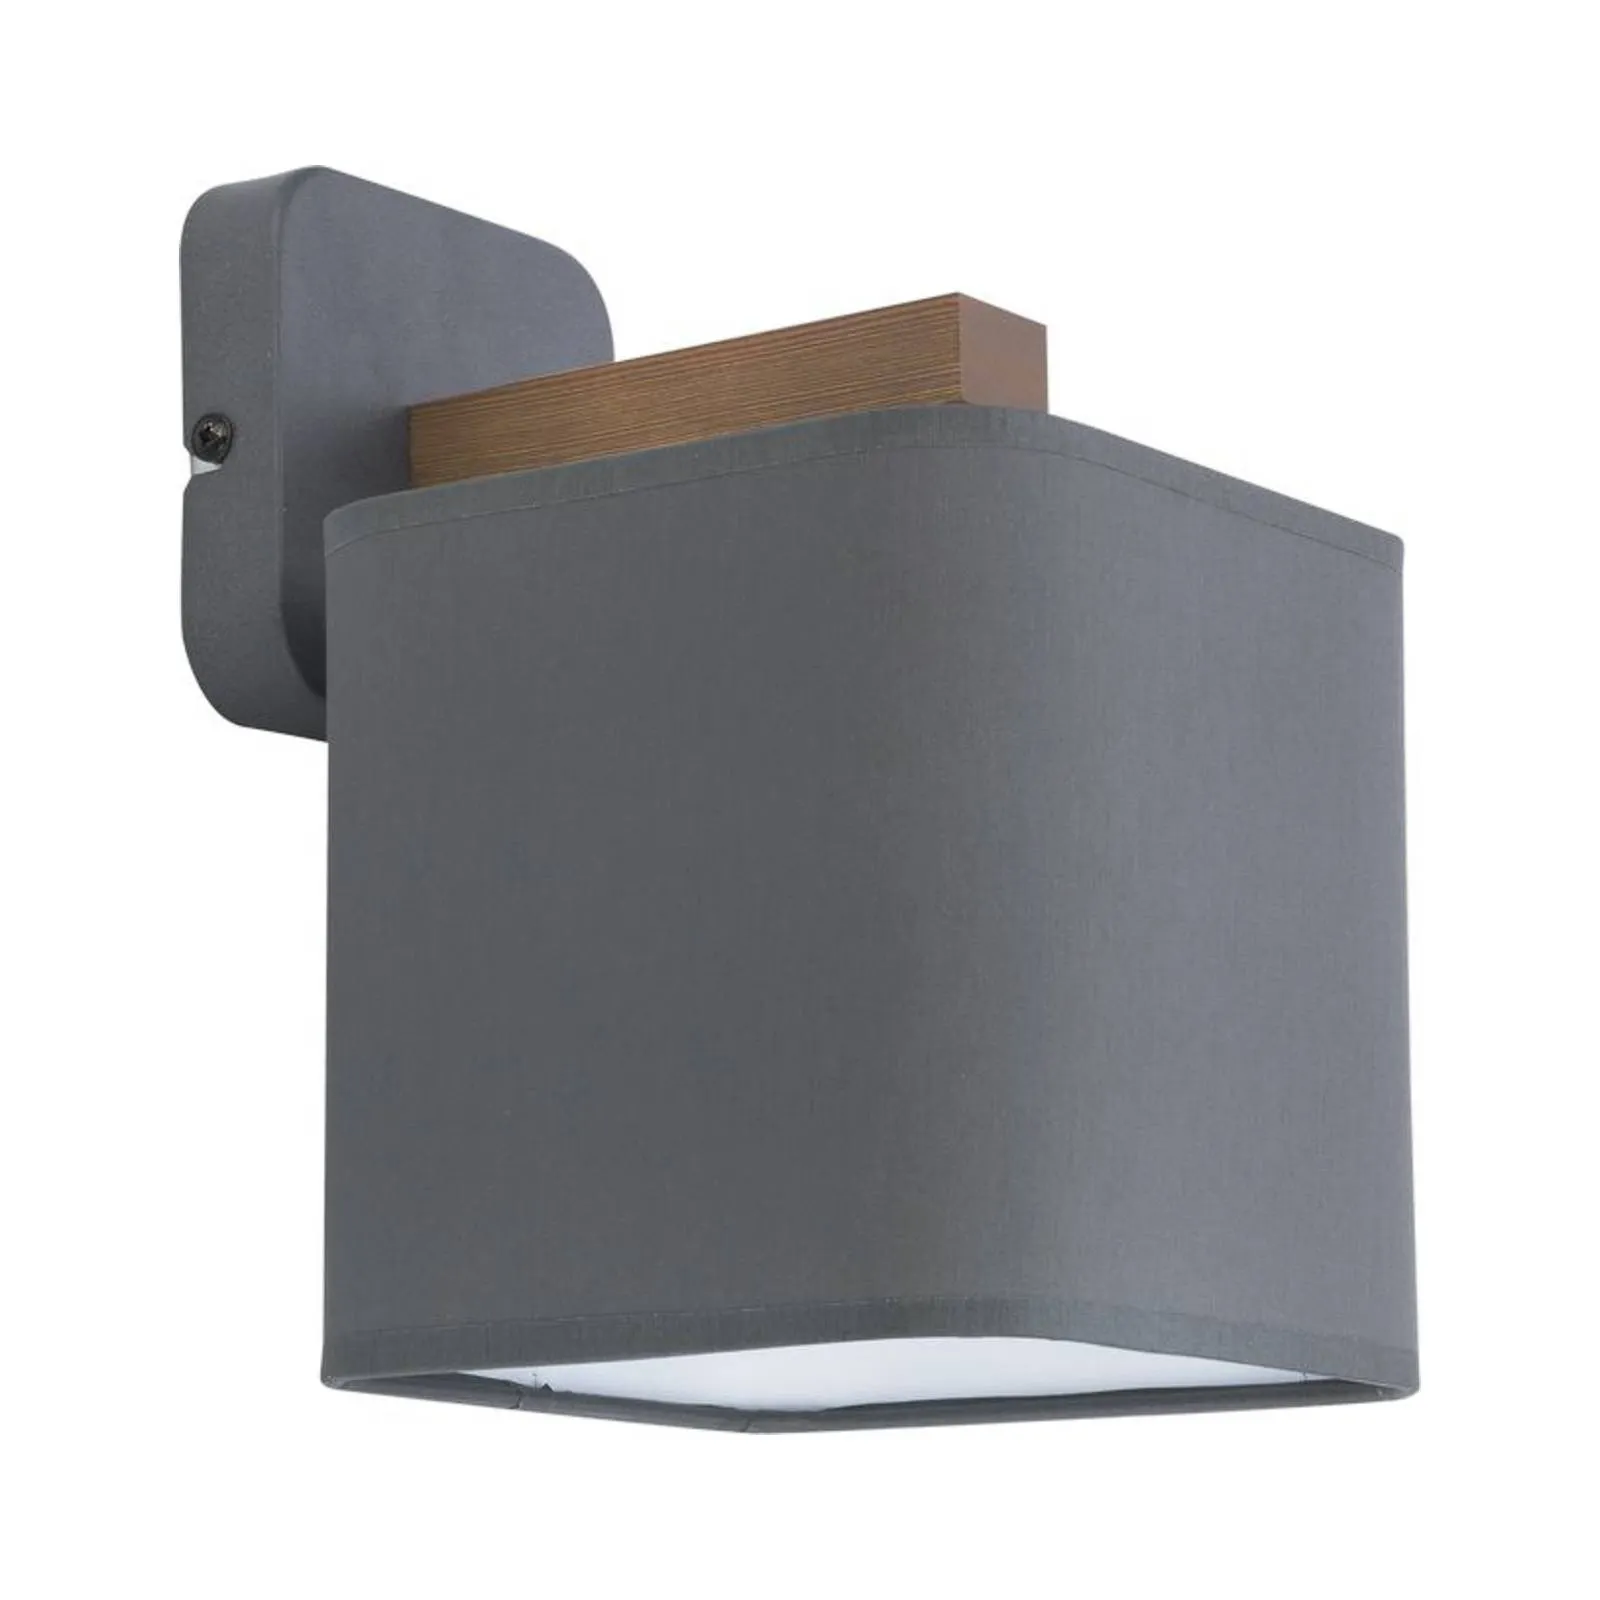 Tora wall light, one-bulb, grey